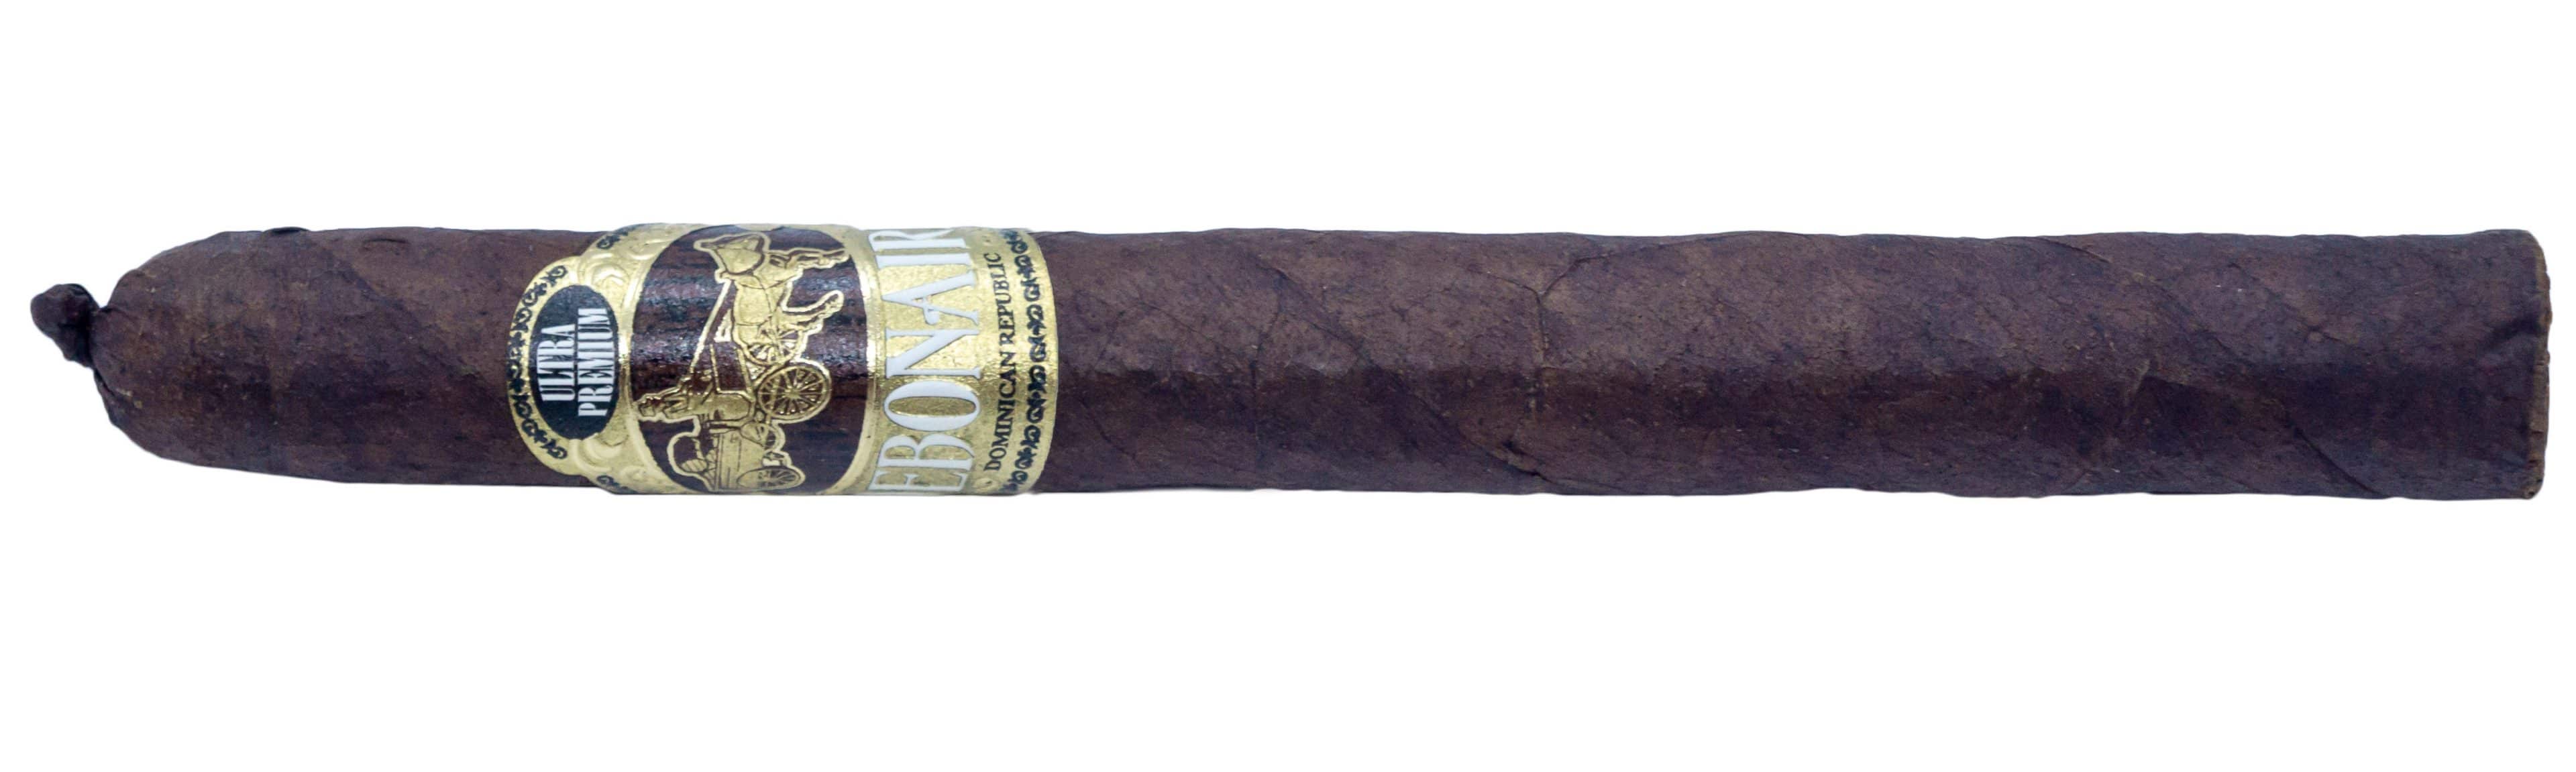 Blind Cigar Review: Debonaire | Maduro Petite Lancero